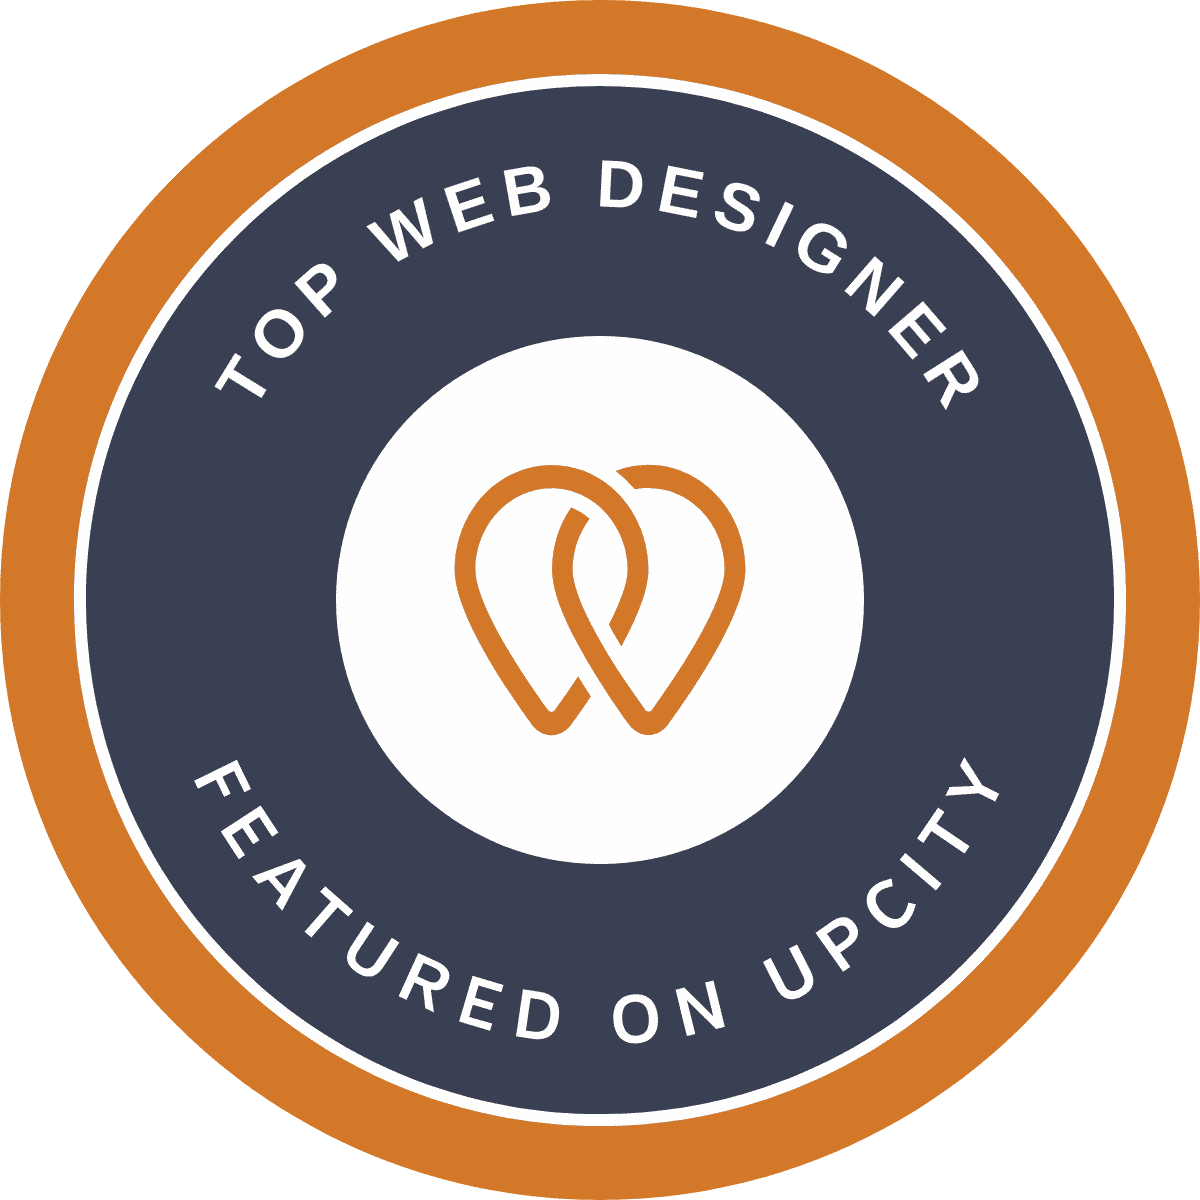 Upcity Contractor Web Design Badge